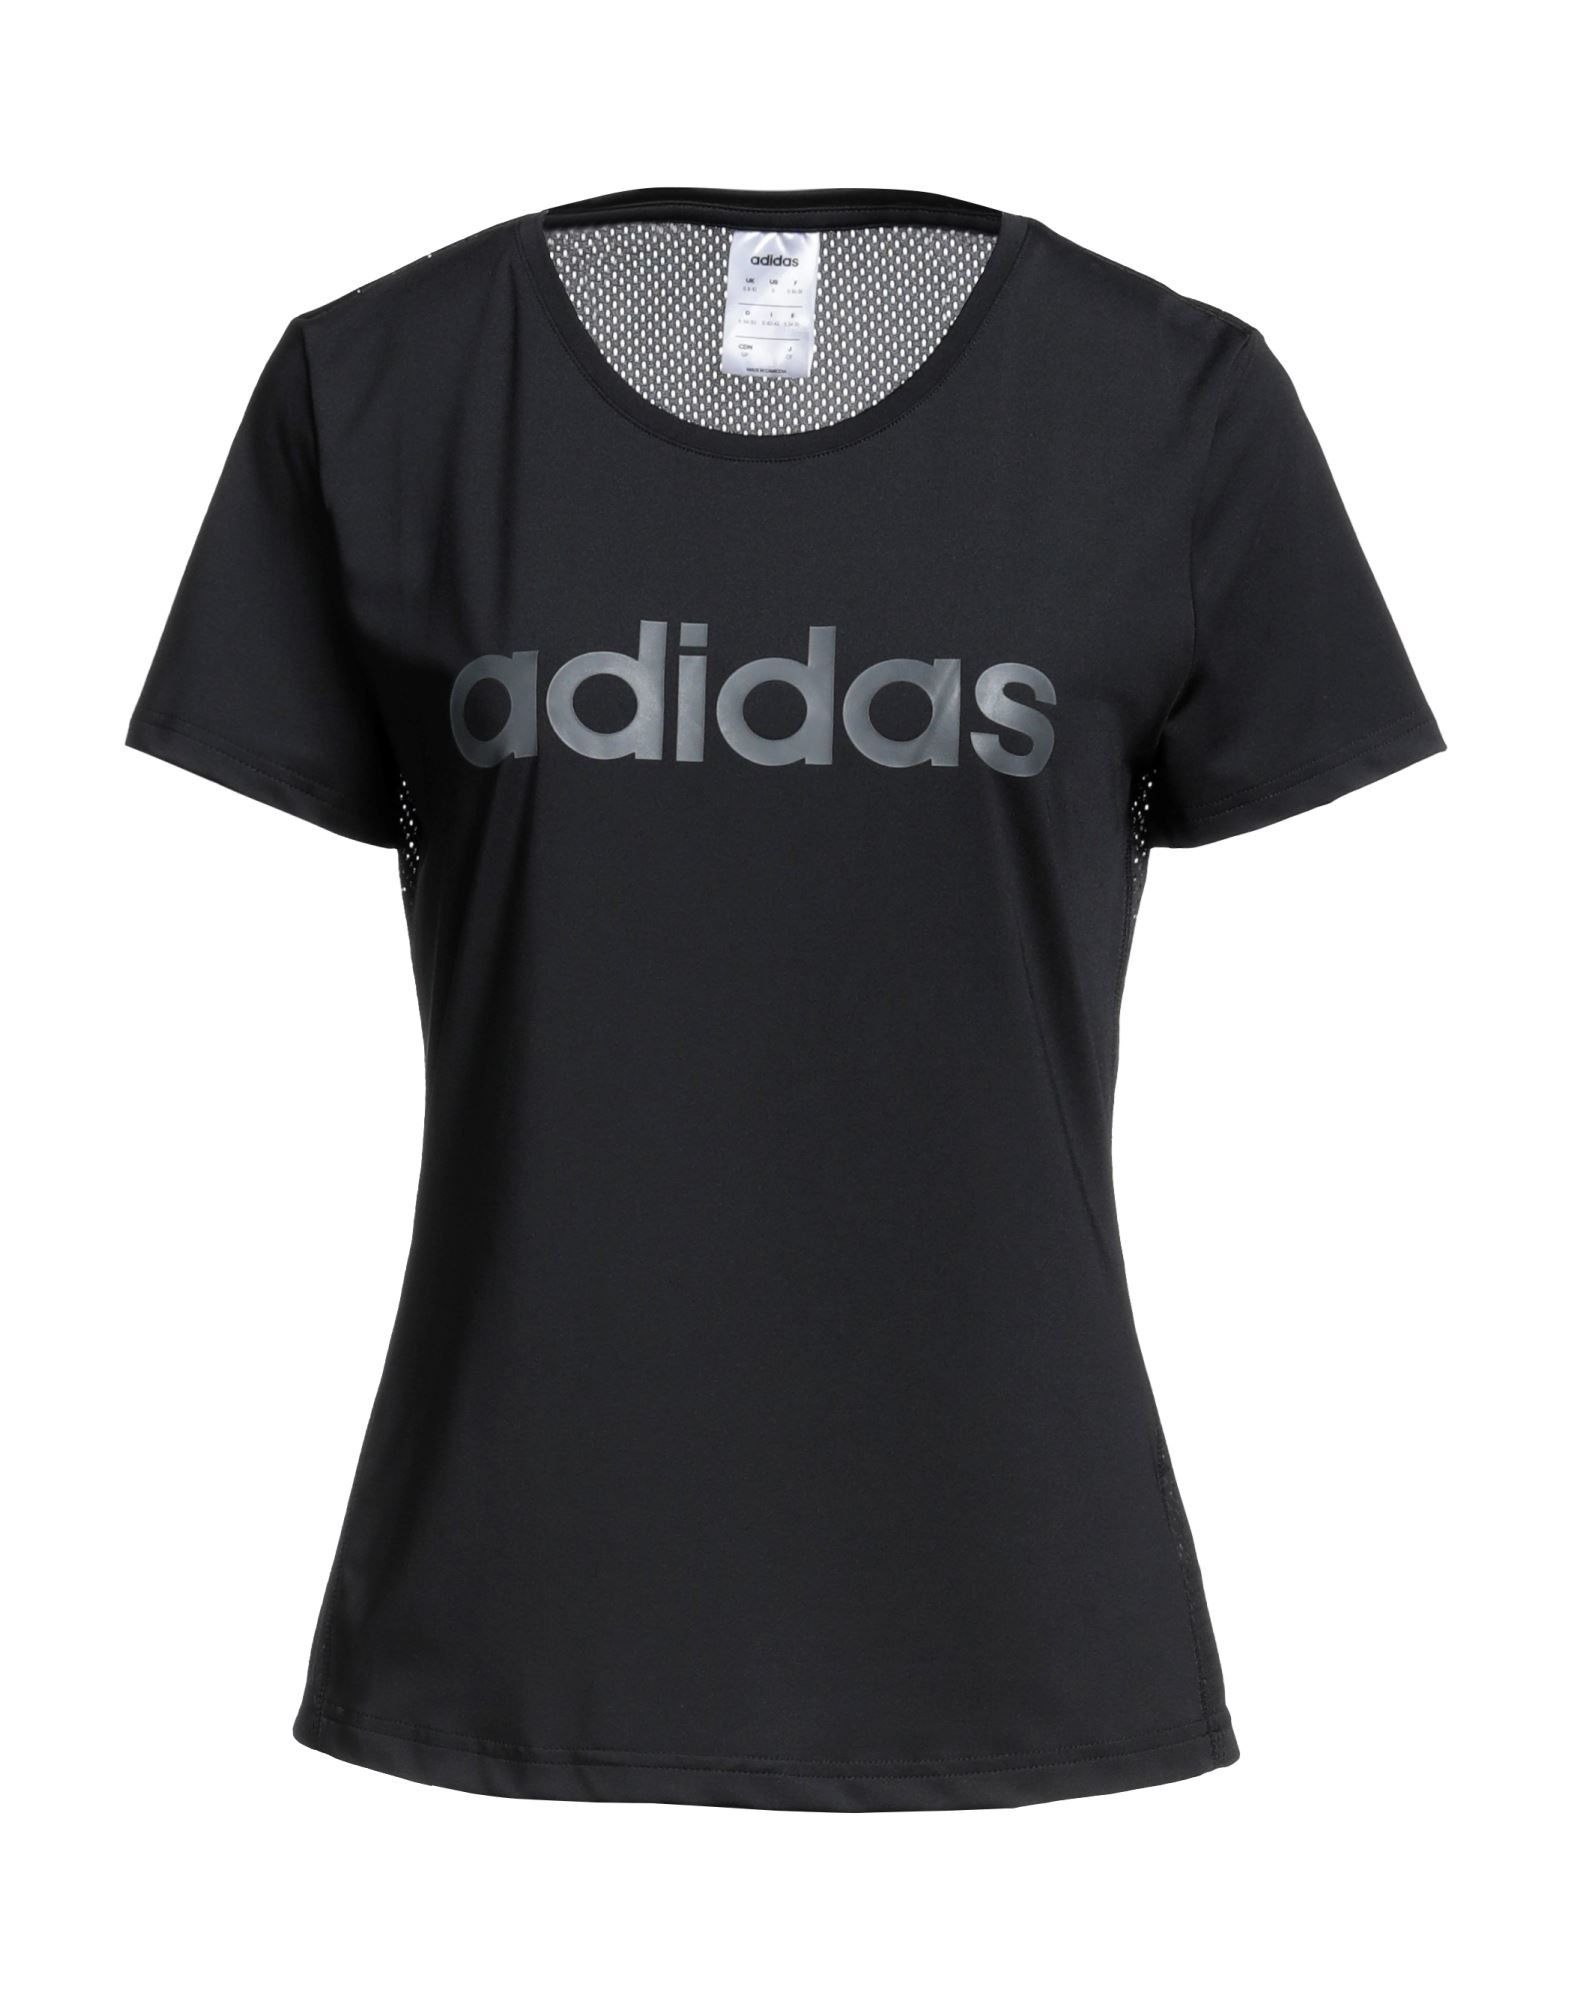 Adidas Originals T-shirts In Black